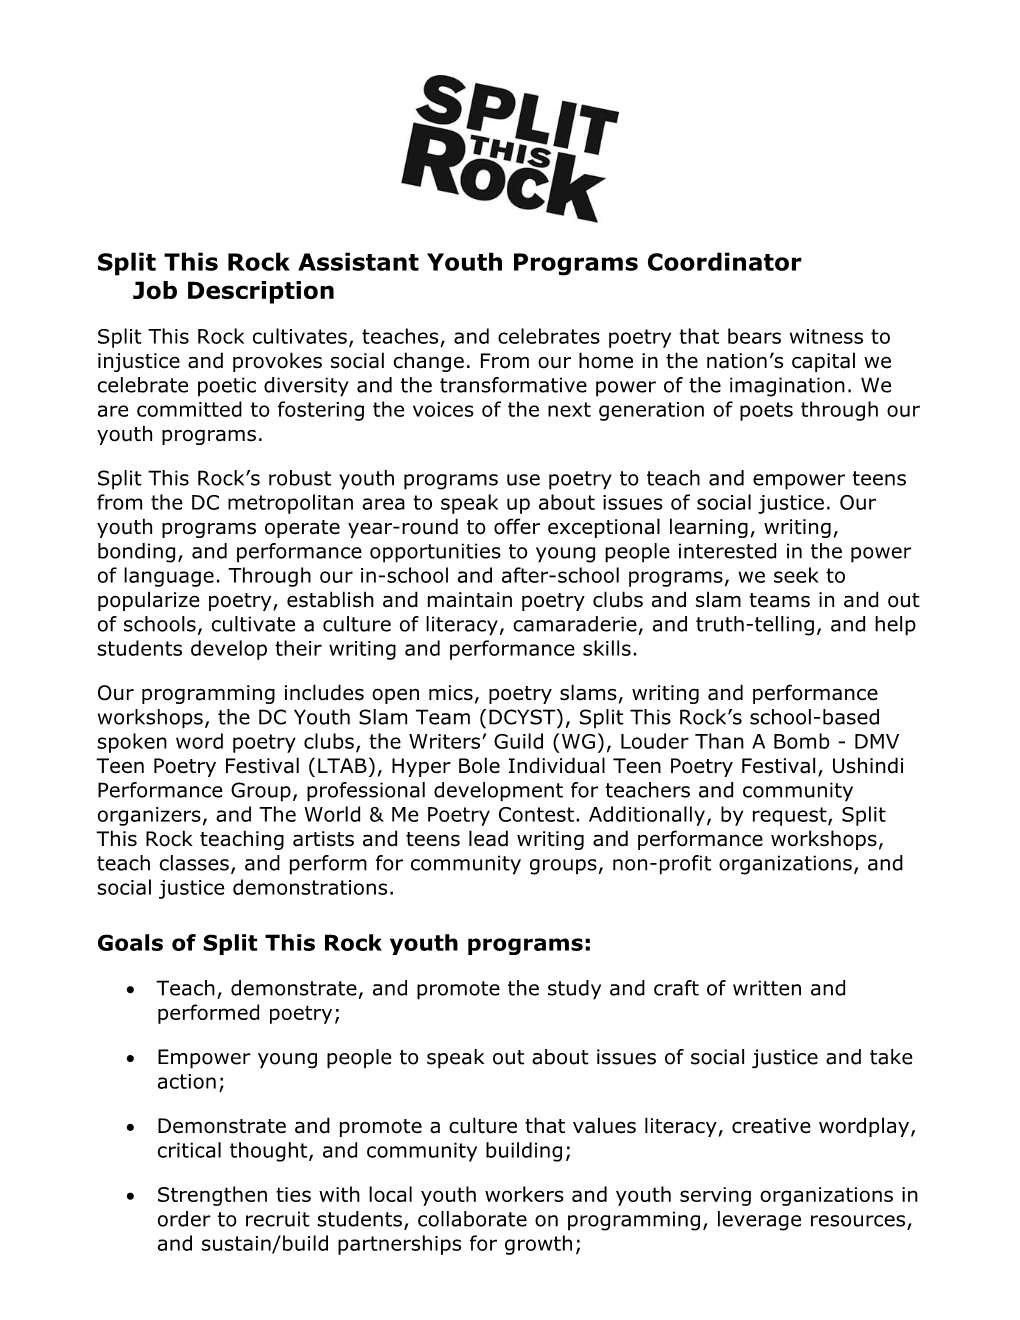 Split This Rock Assistant Youth Programs Coordinator Job Description